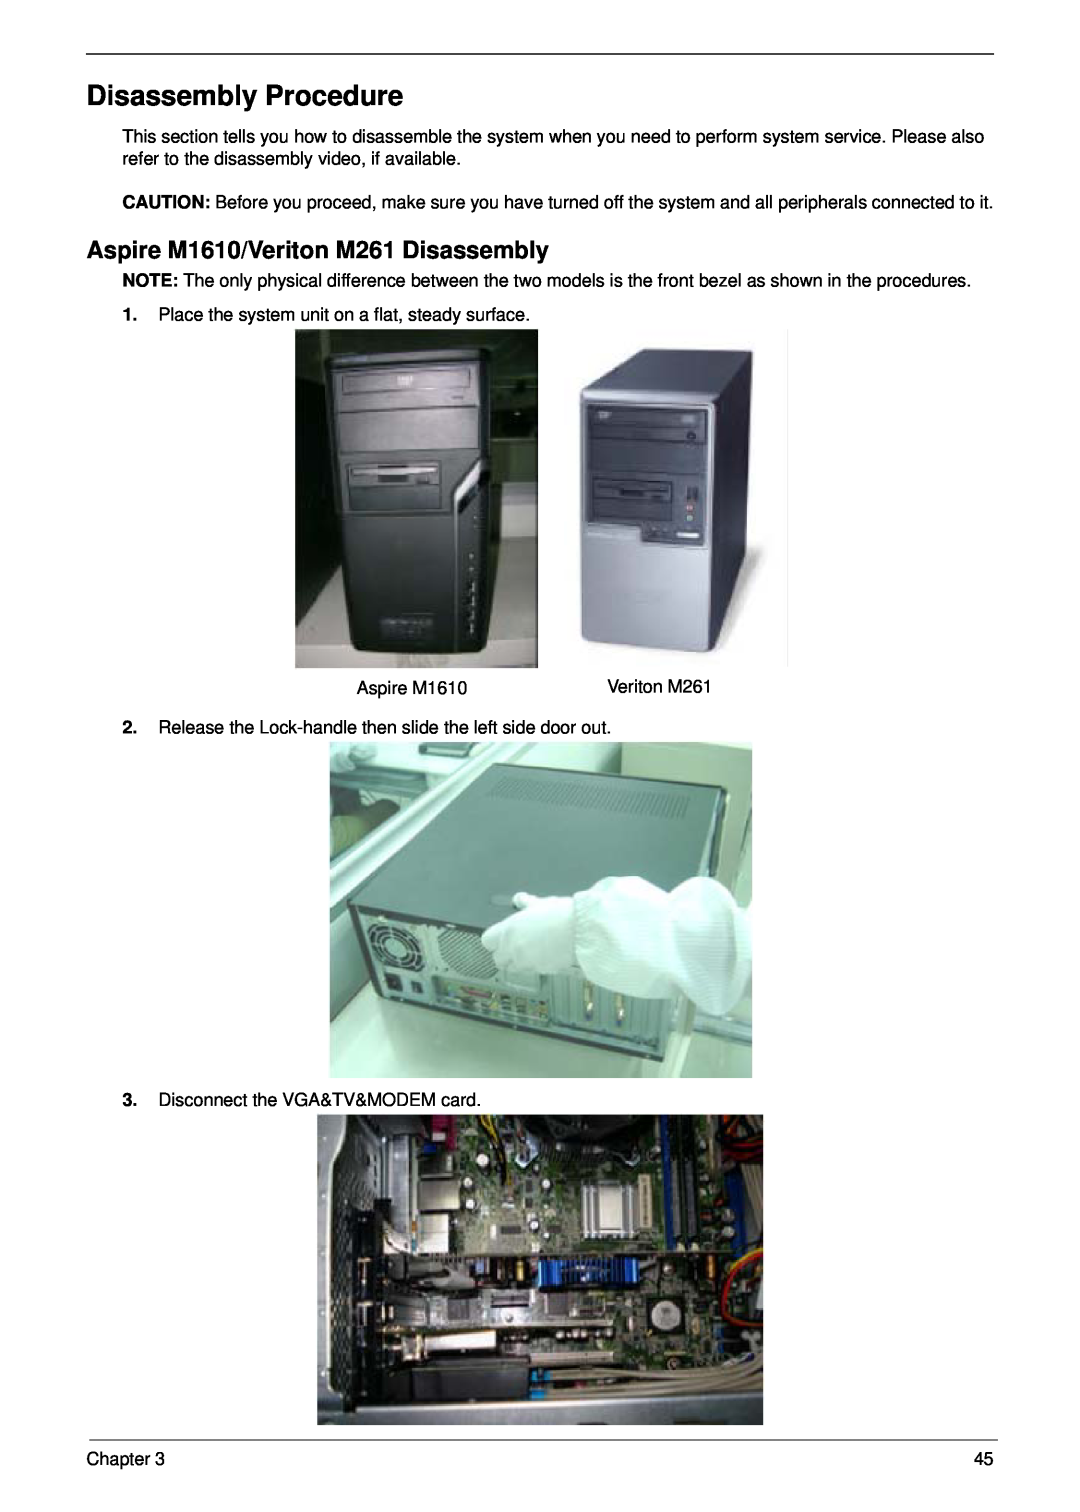 Aspire Digital manual Disassembly Procedure, Aspire M1610/Veriton M261 Disassembly 